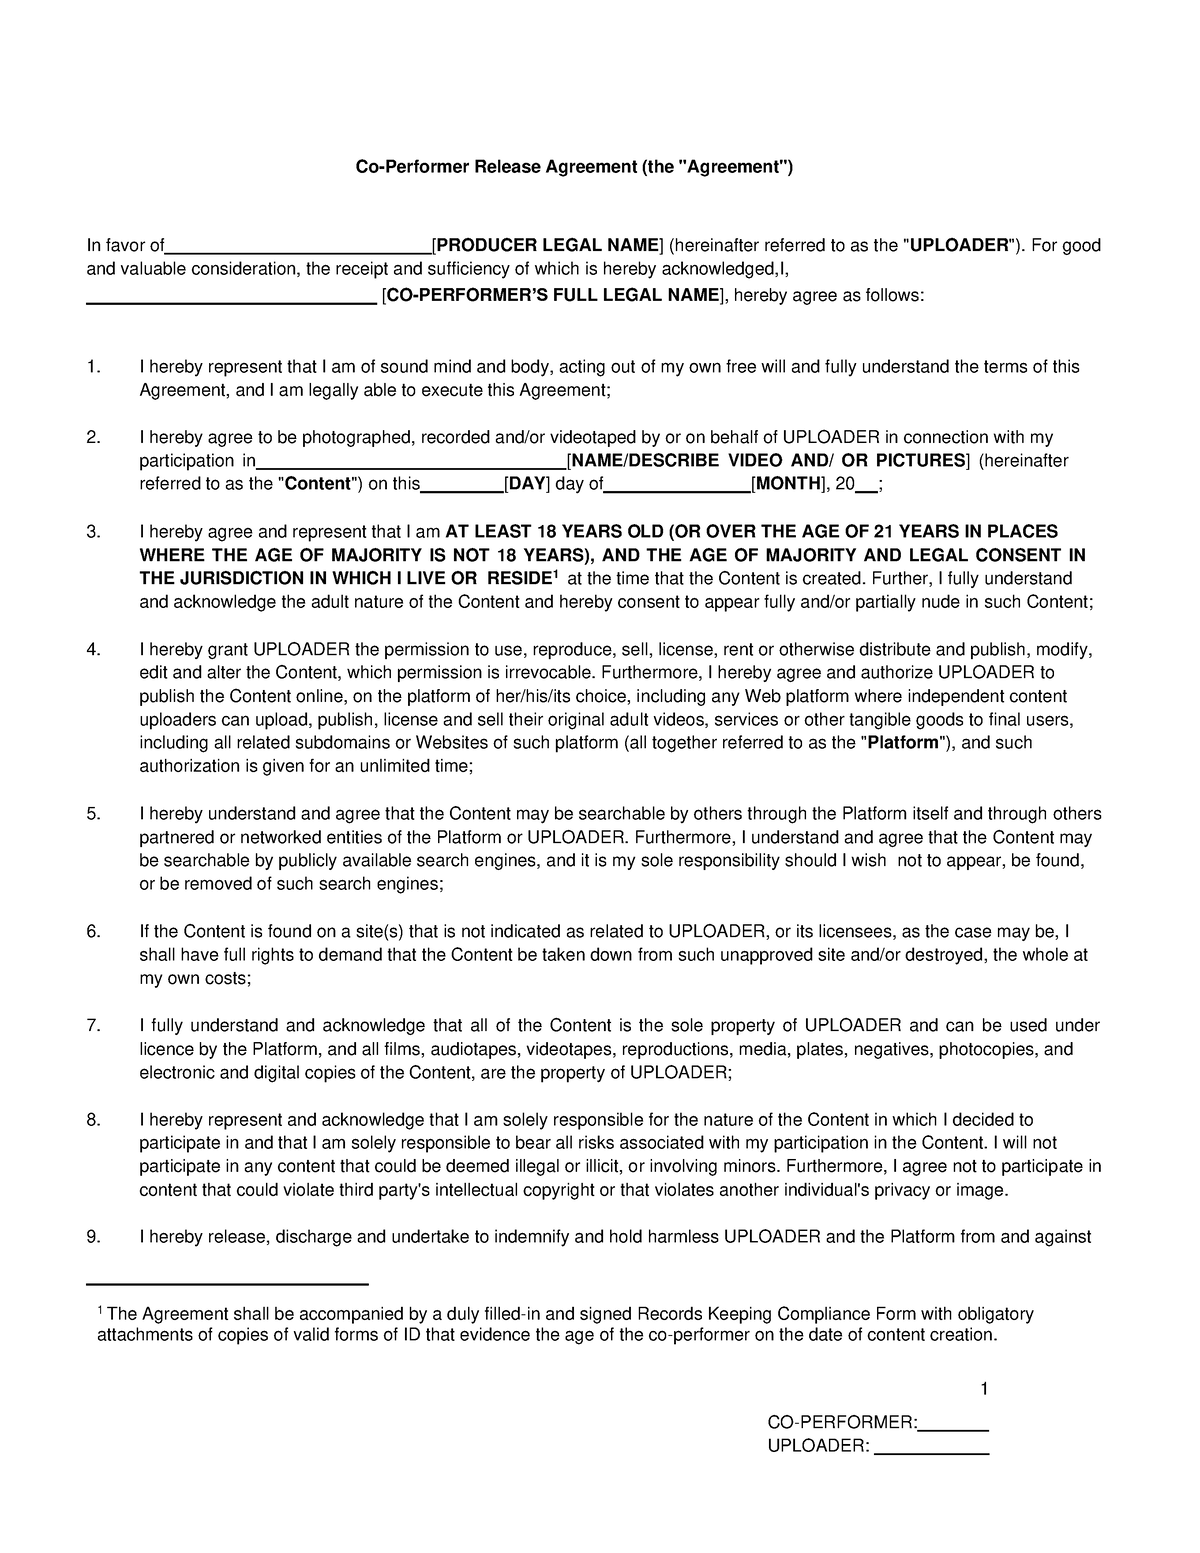 XHP Co Performer Agreement 2257 form - 1 CO-PERFORMER: UPLOADER: Co ...